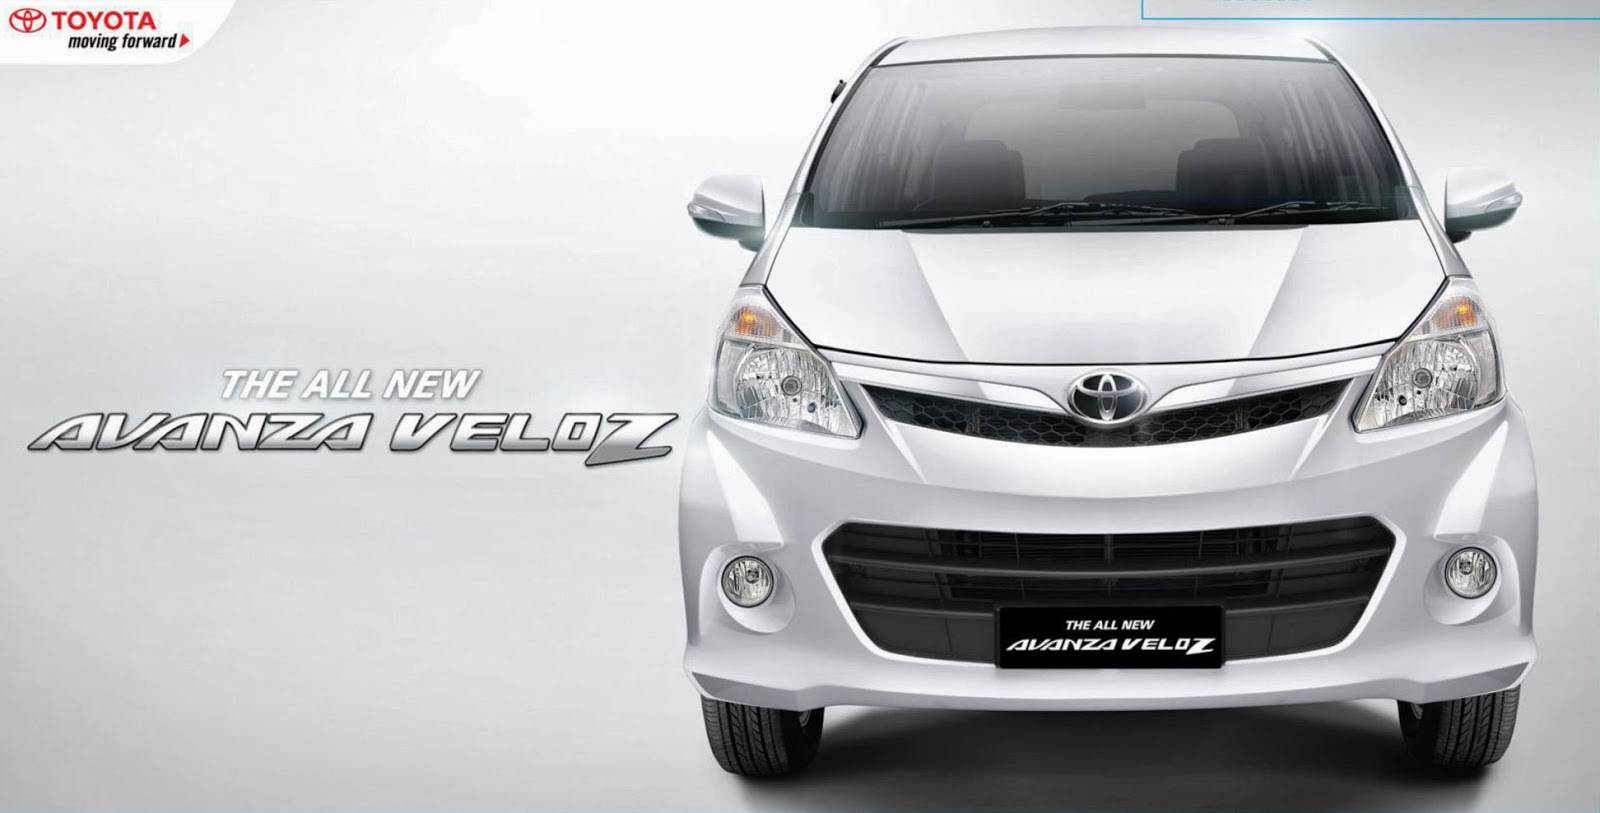 Spesifikasi Mobil Toyota Avanza Veloz Kumpulan Tips Dan Seputar